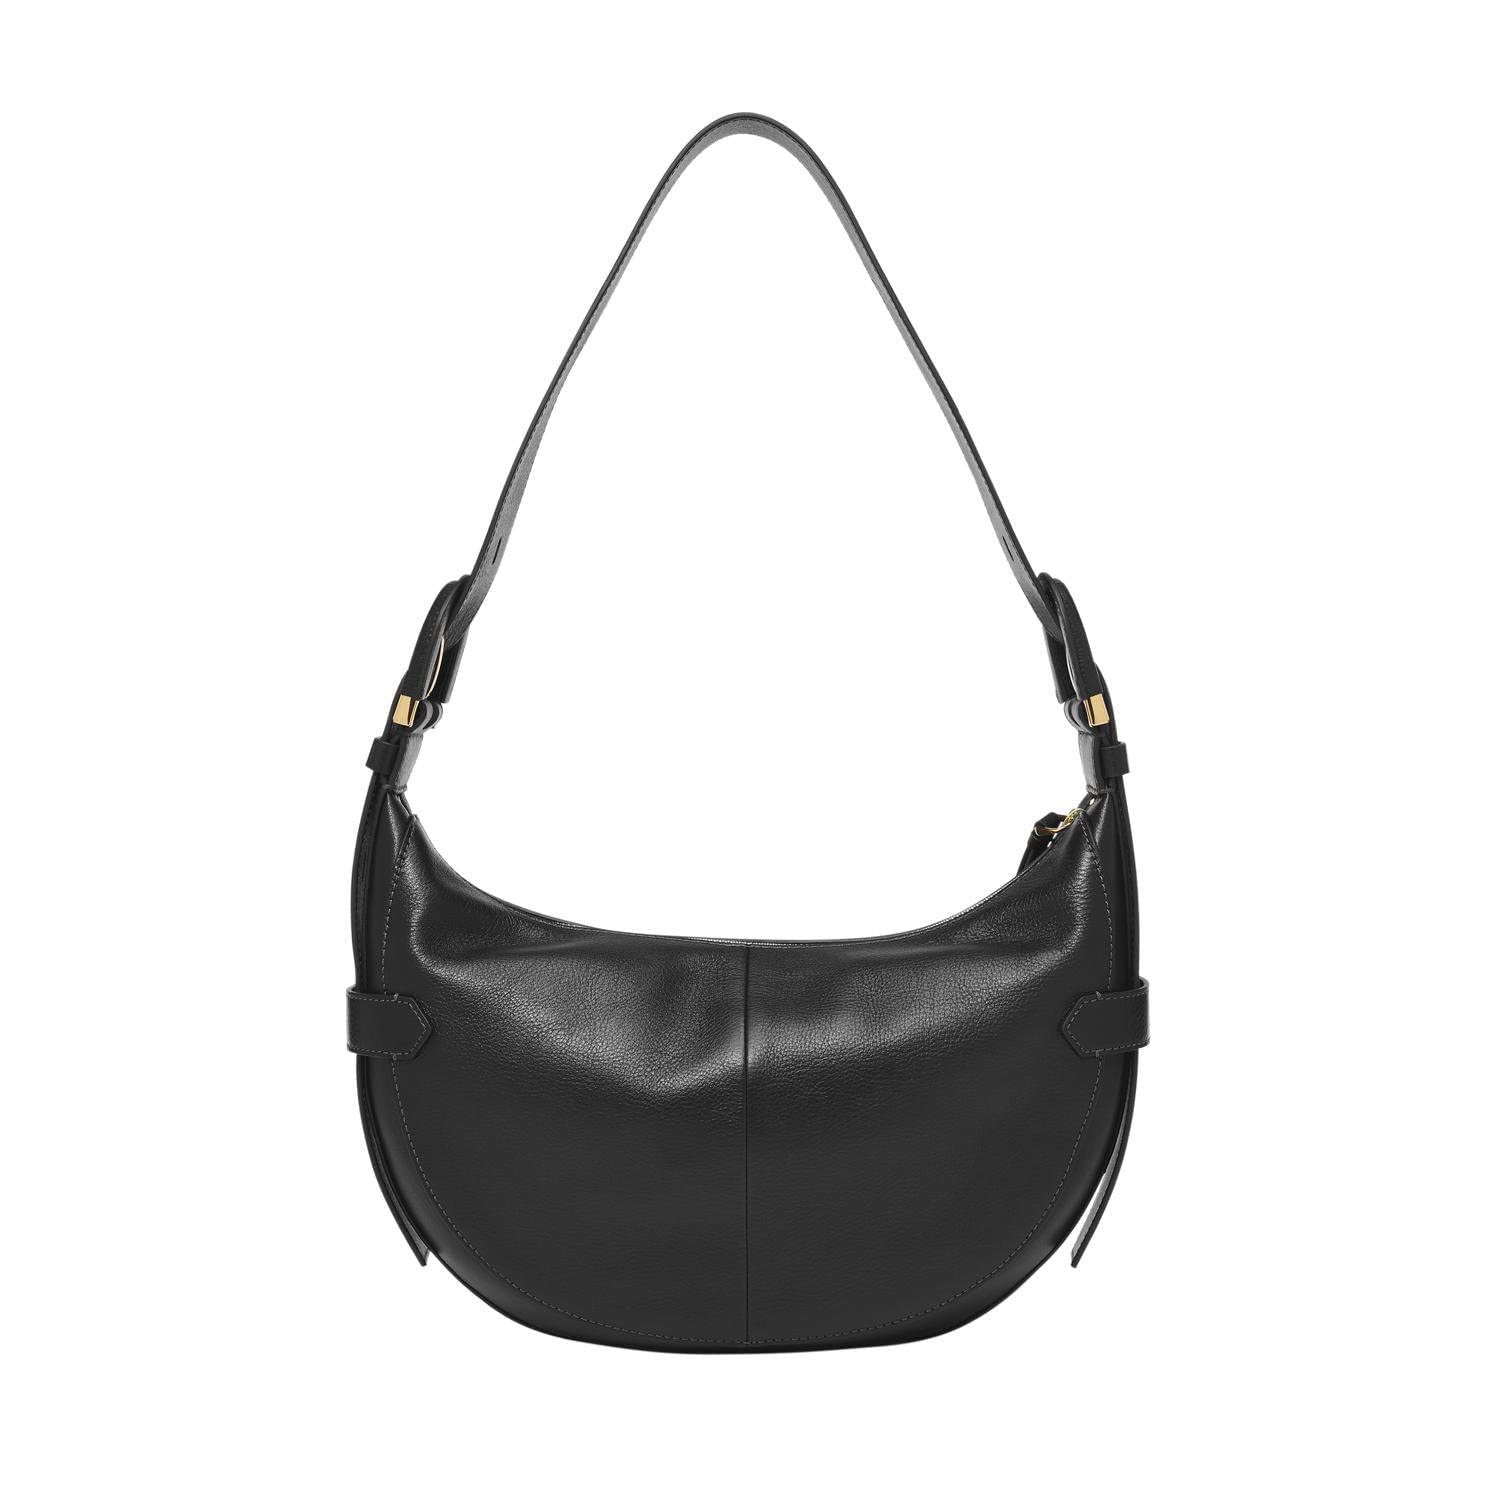 Fossil Women's Harwell Leather Hobo Purse Handbag for Women